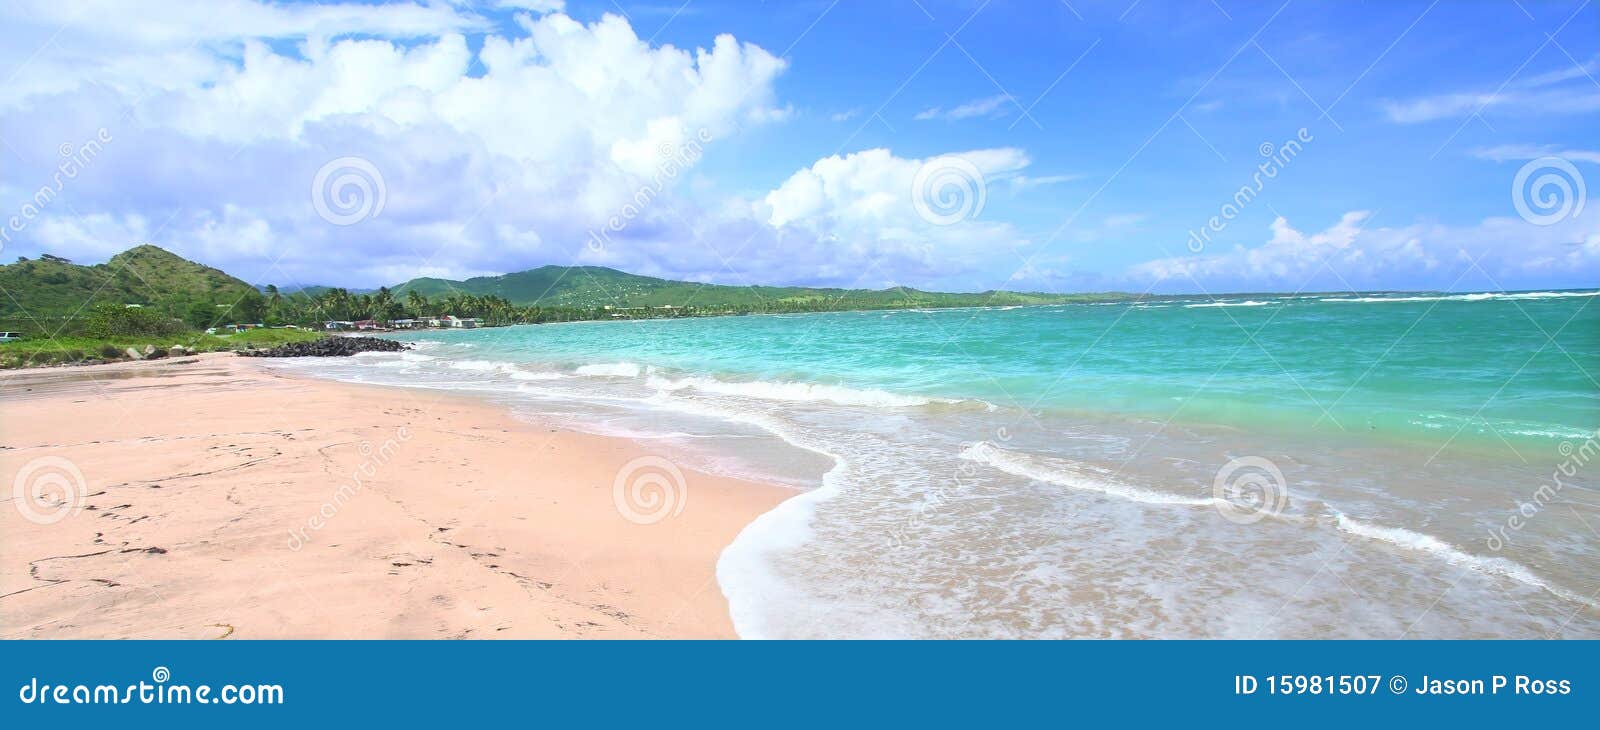 anse de sables beach - saint lucia